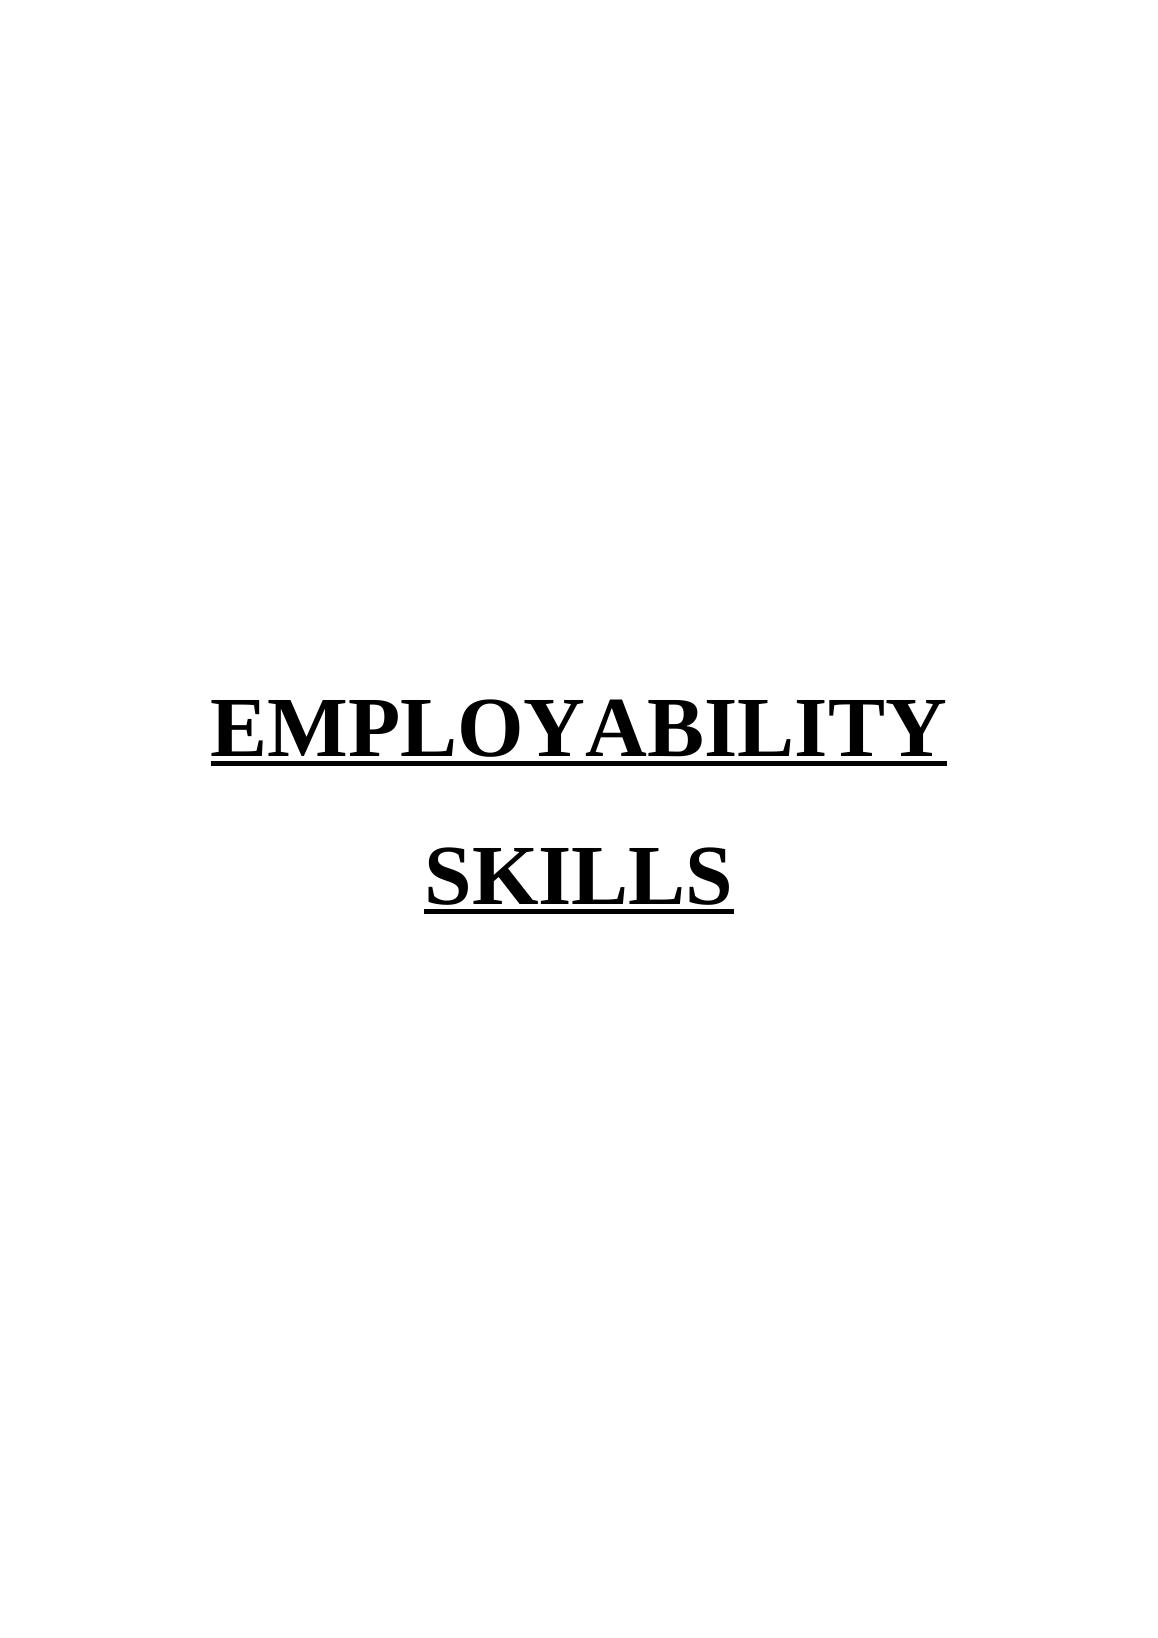 Employability Skills Report on NHS Hospitals_1